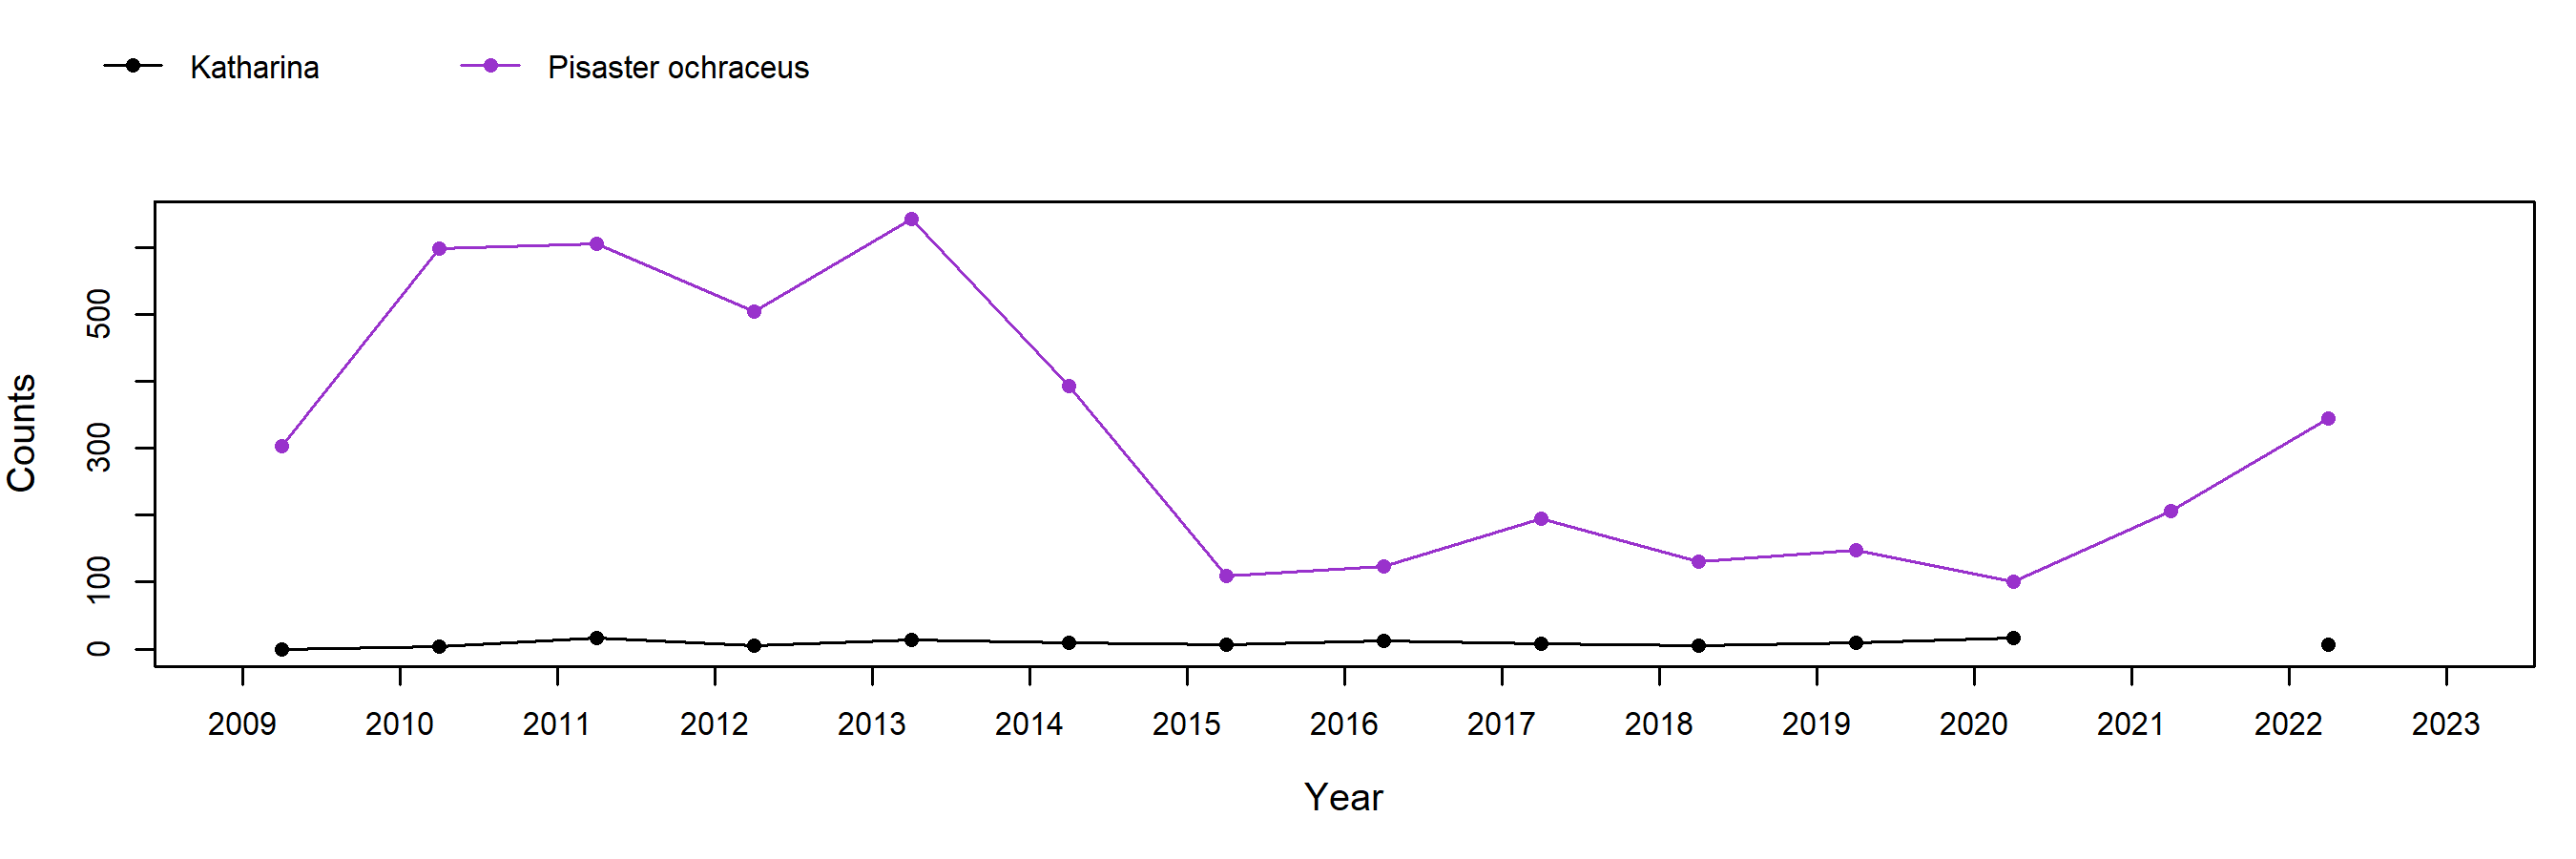 Taylor Point Pisaster trend plot